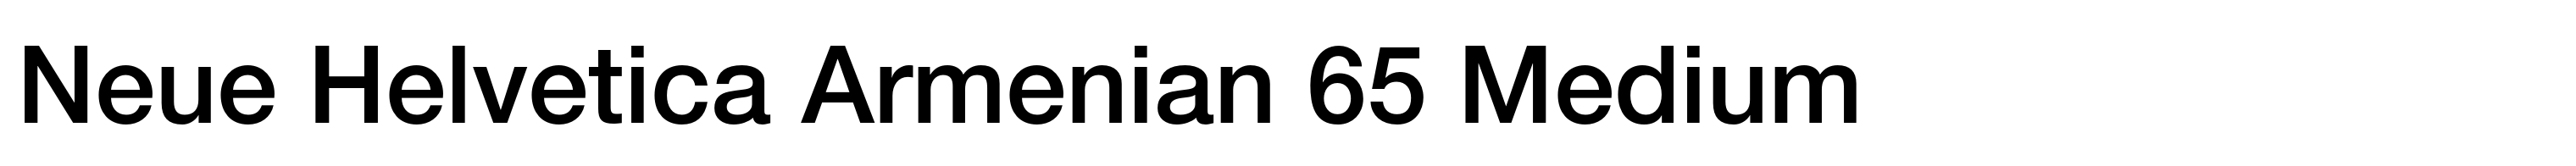 Neue Helvetica Armenian 65 Medium